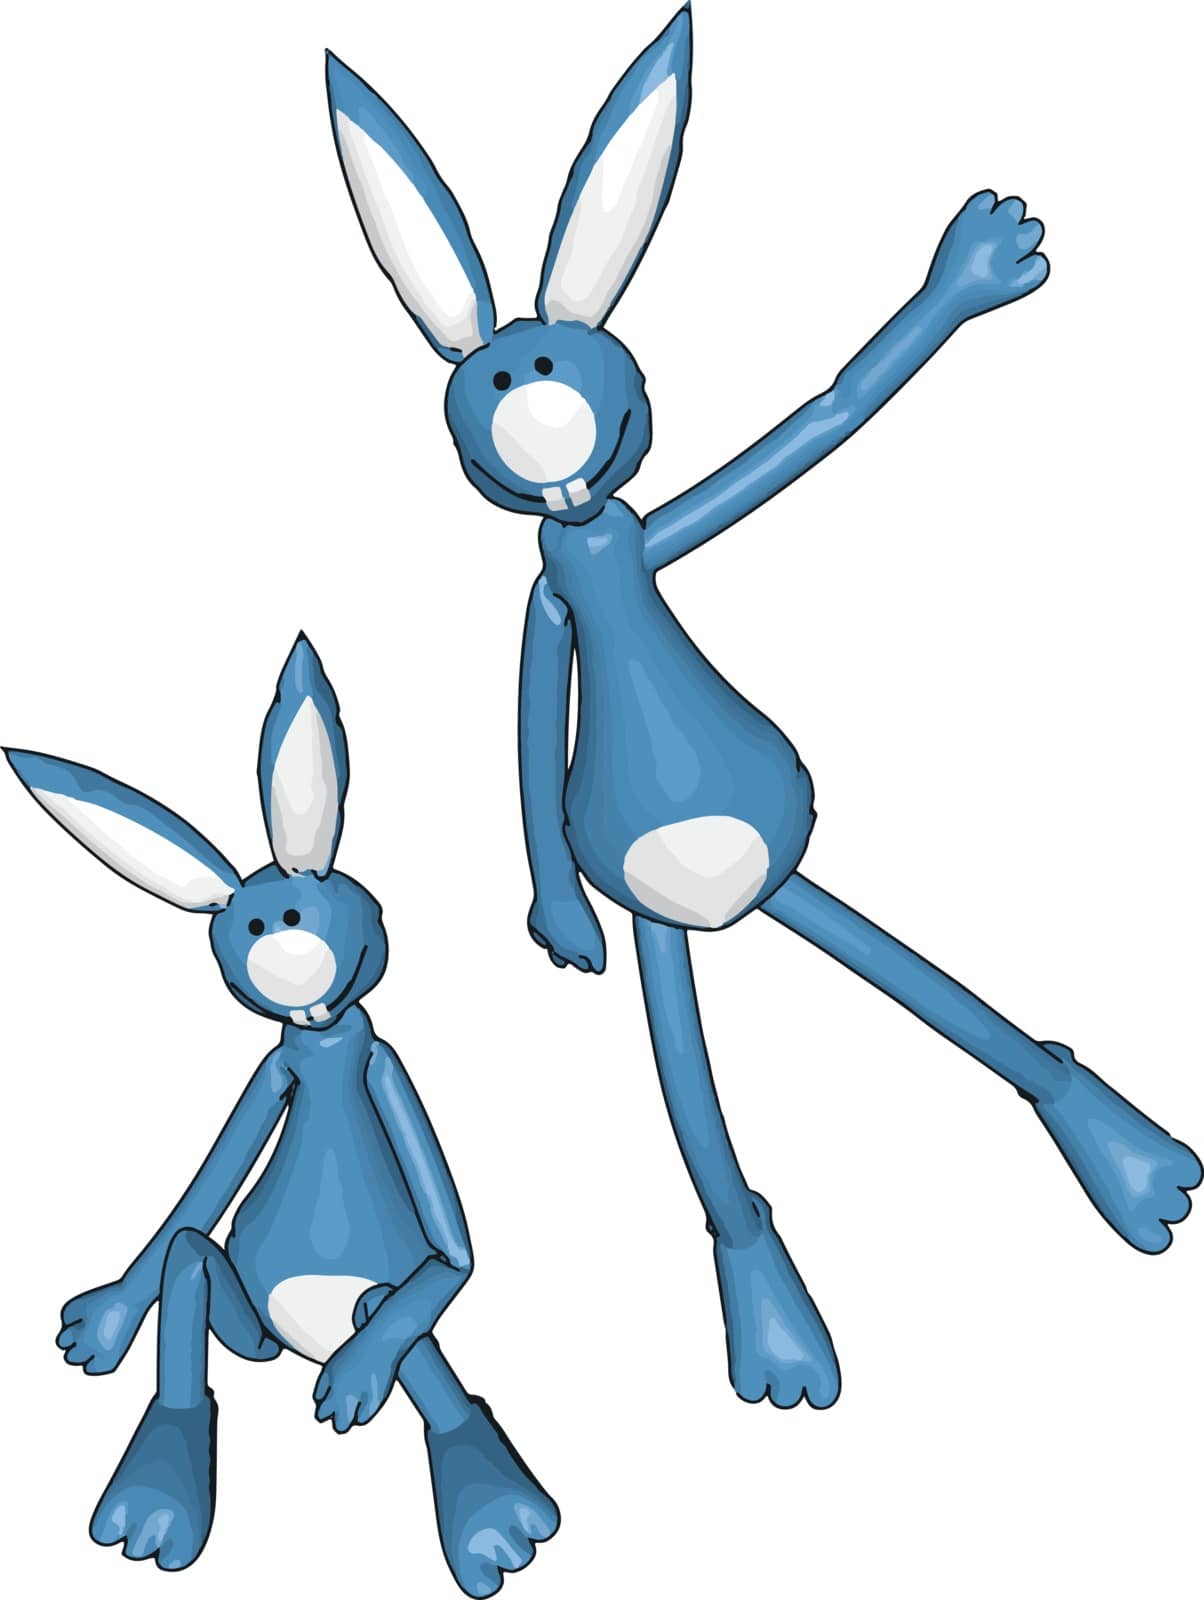 Bunny toys, illustration, vector on white background.